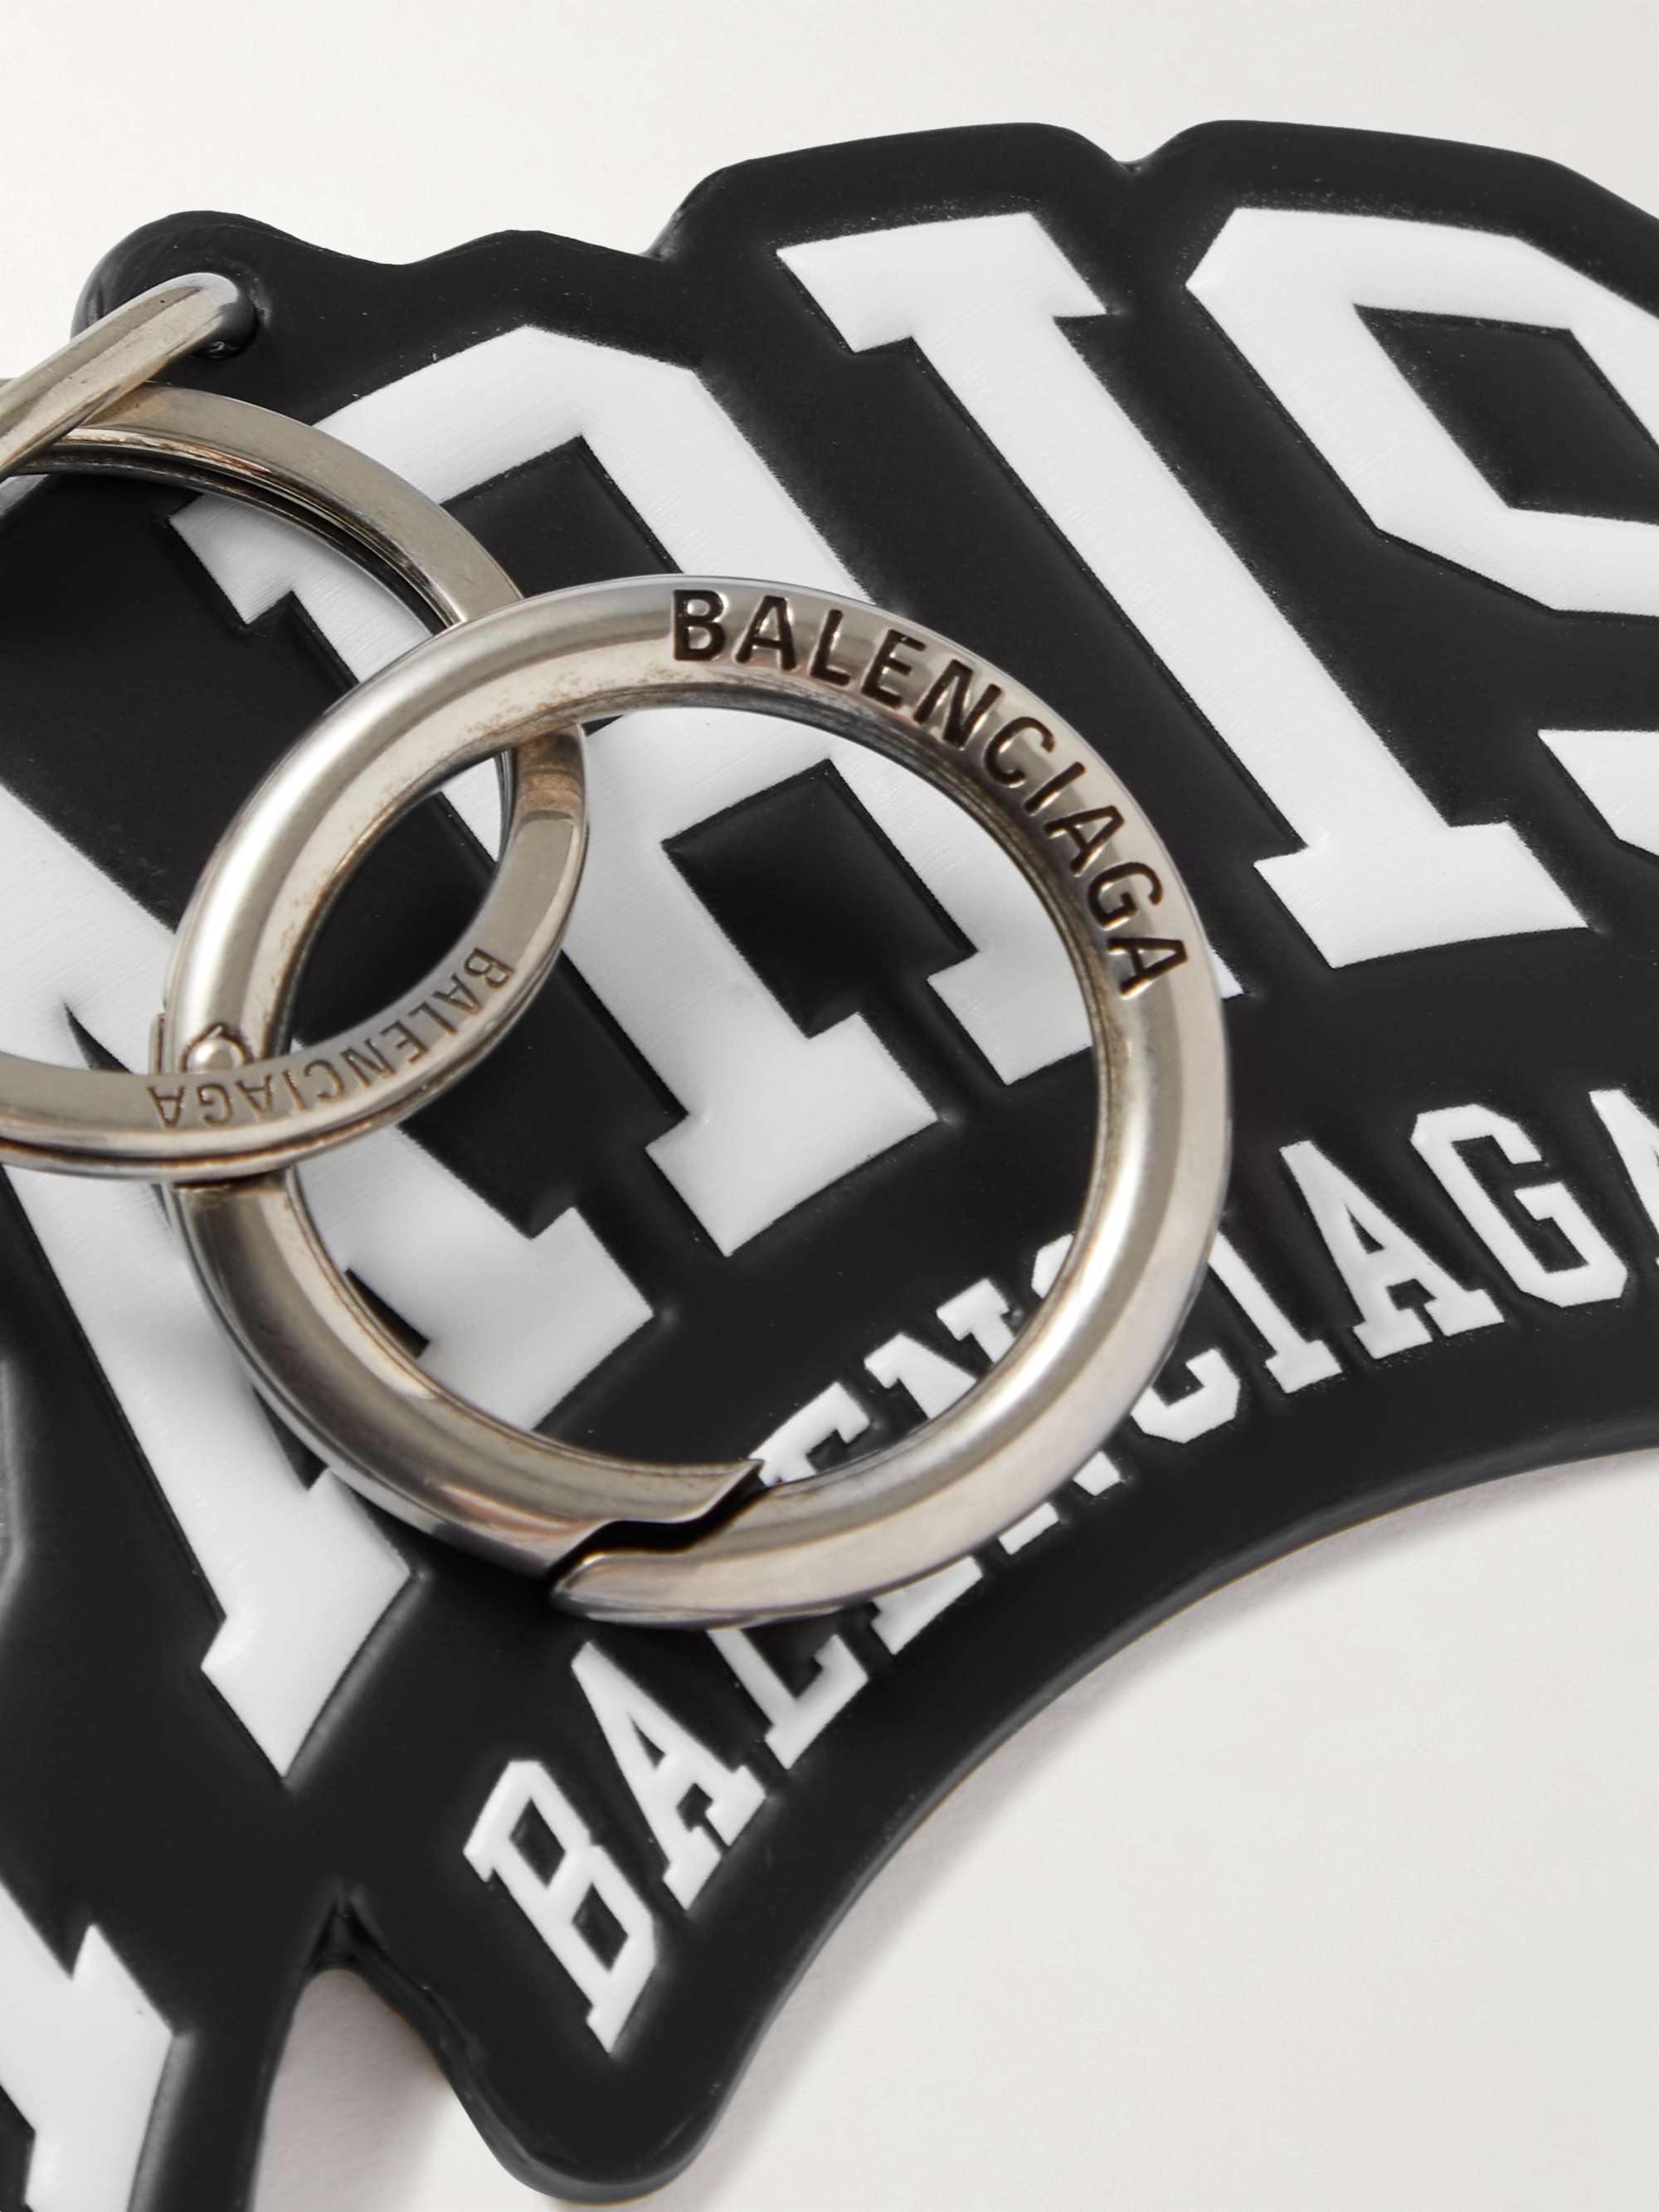 BALENCIAGA Logo-Embossed Leather Key Ring